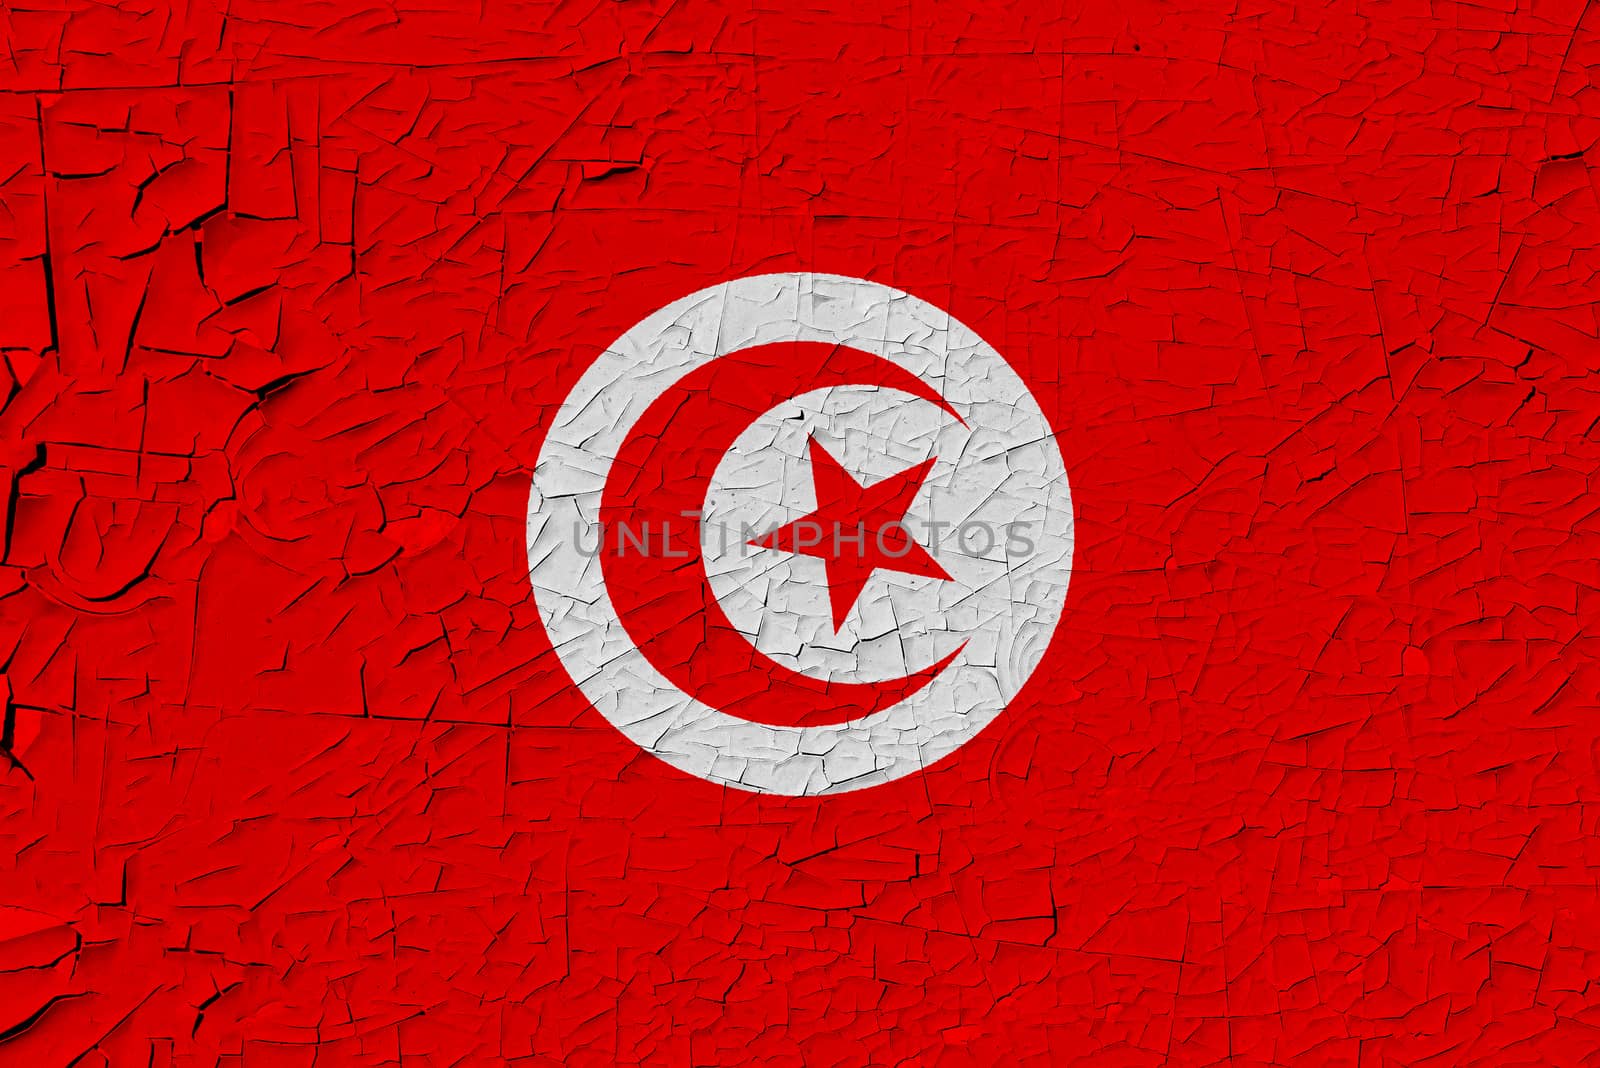 Tunisia painted flag. Patriotic old grunge background. National flag of Tunisia